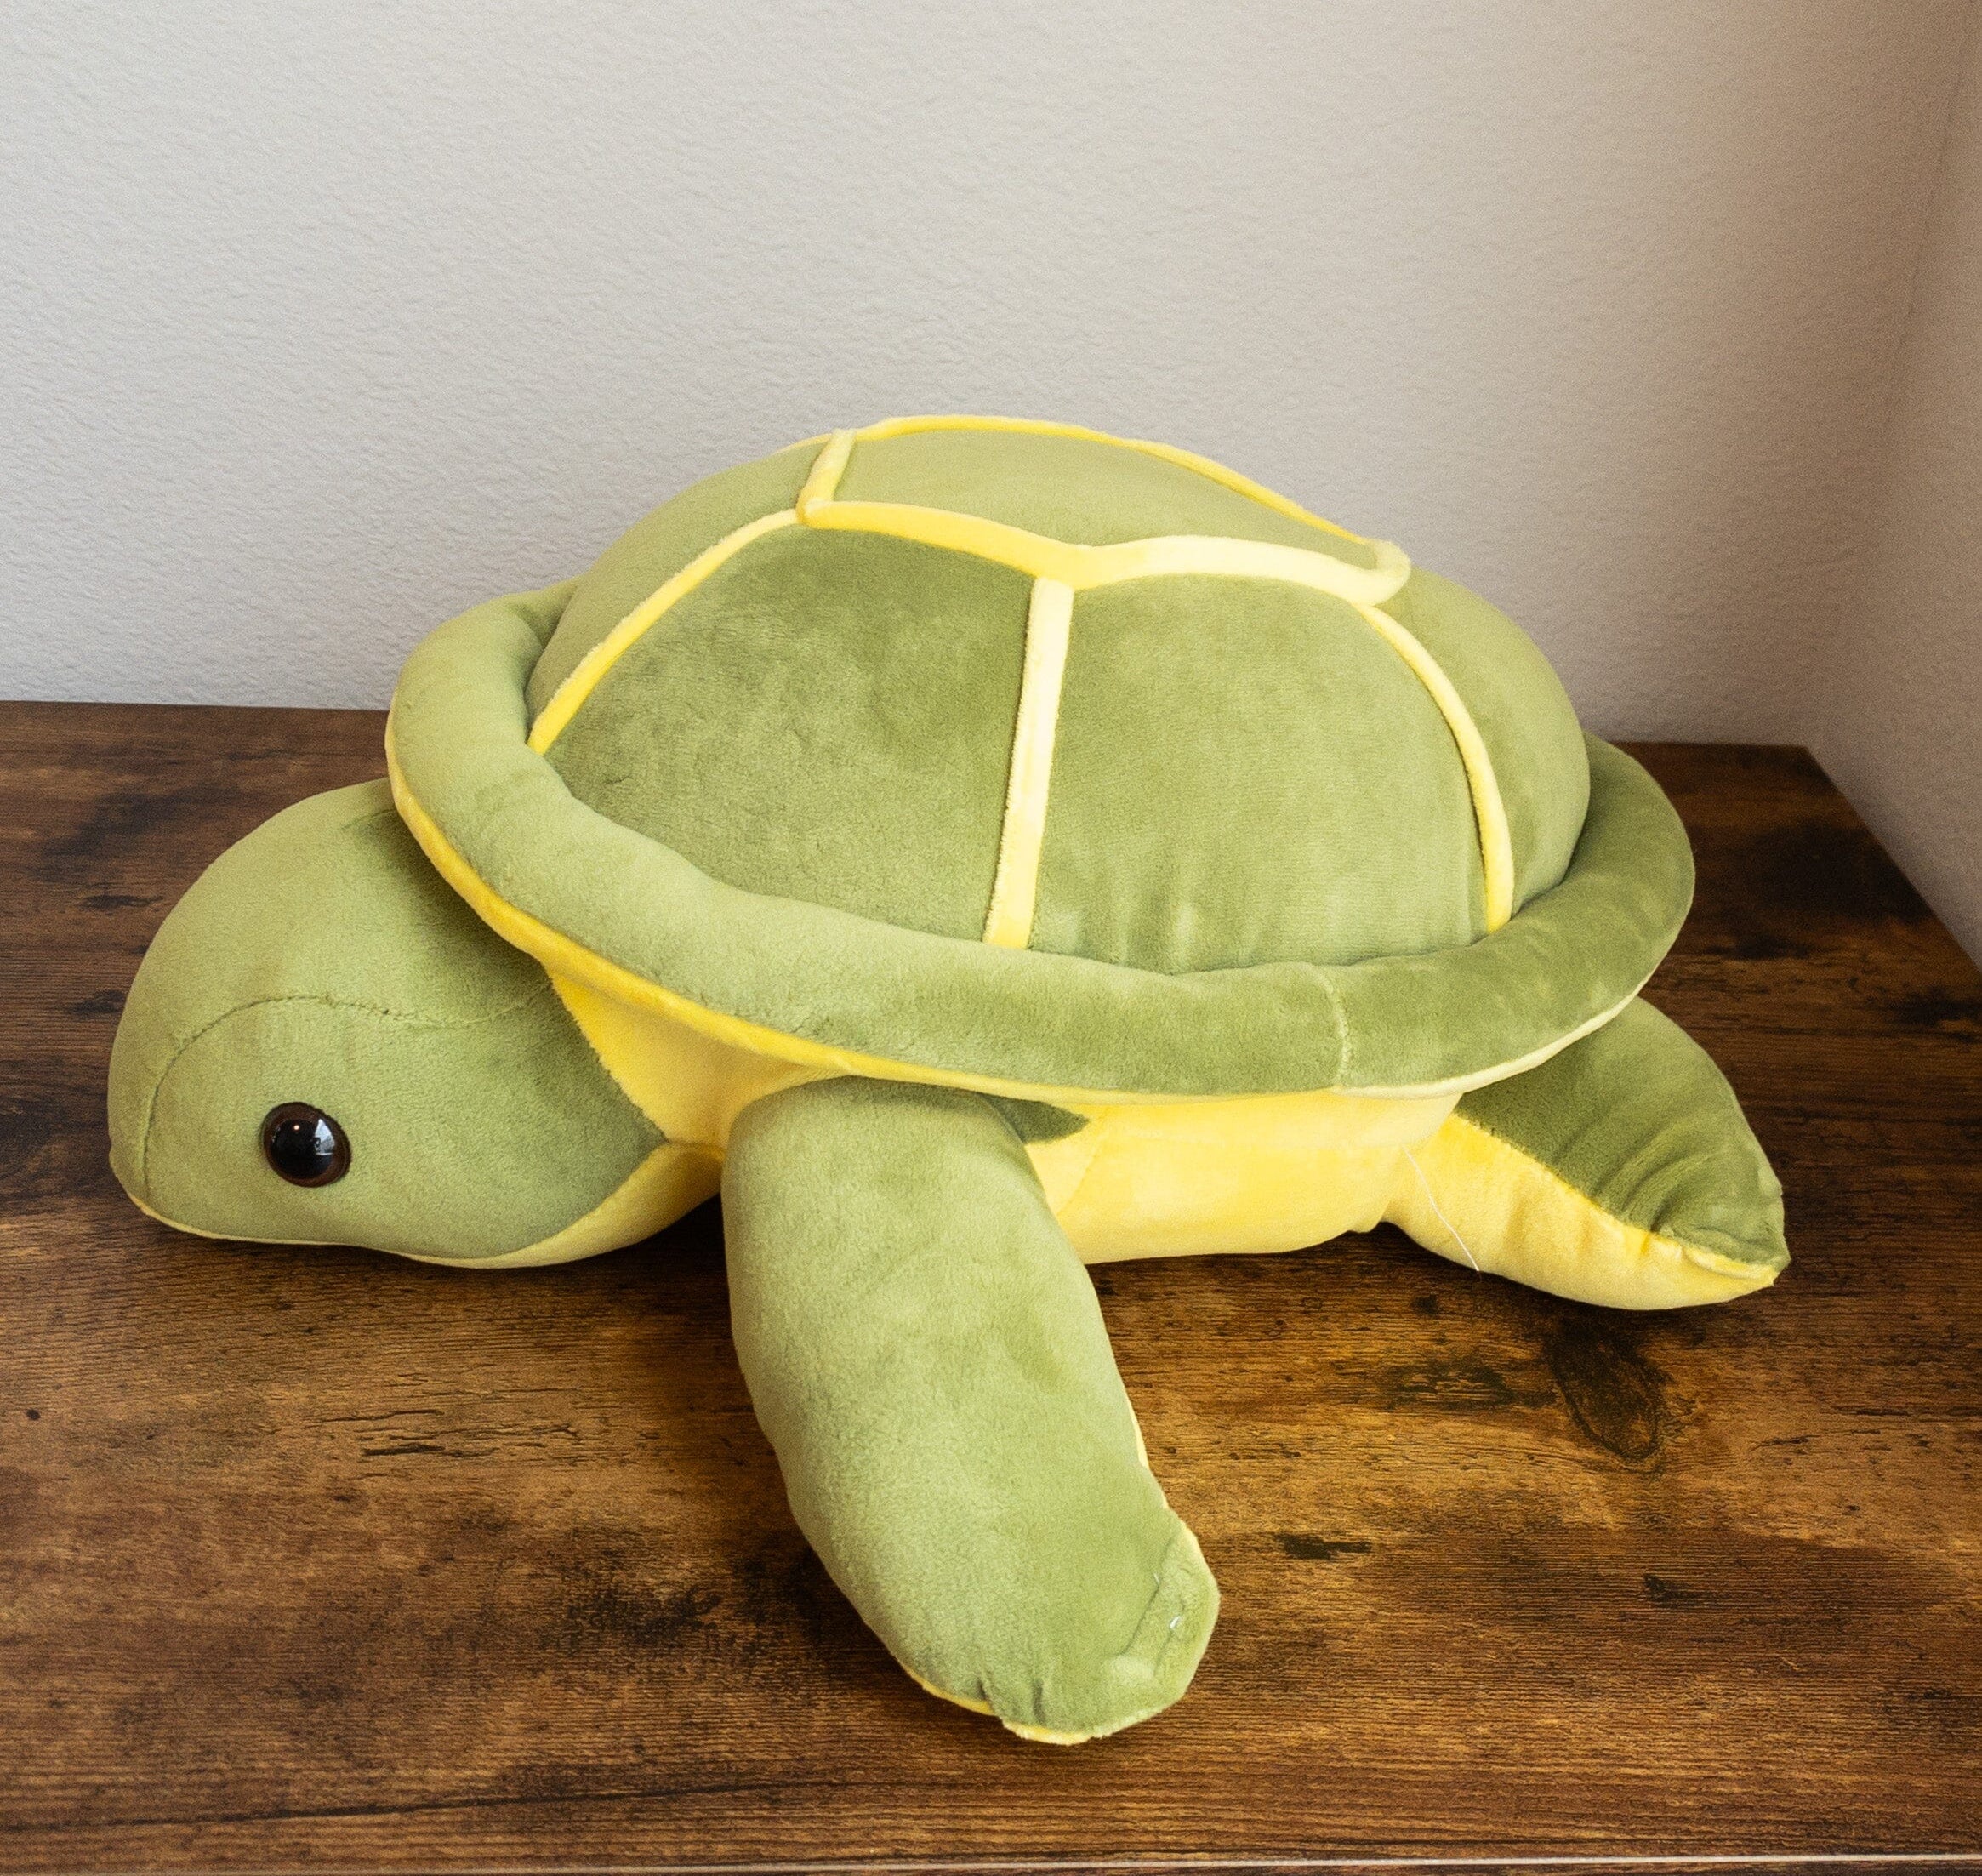 Turtle Plush The Autistic Innovator 